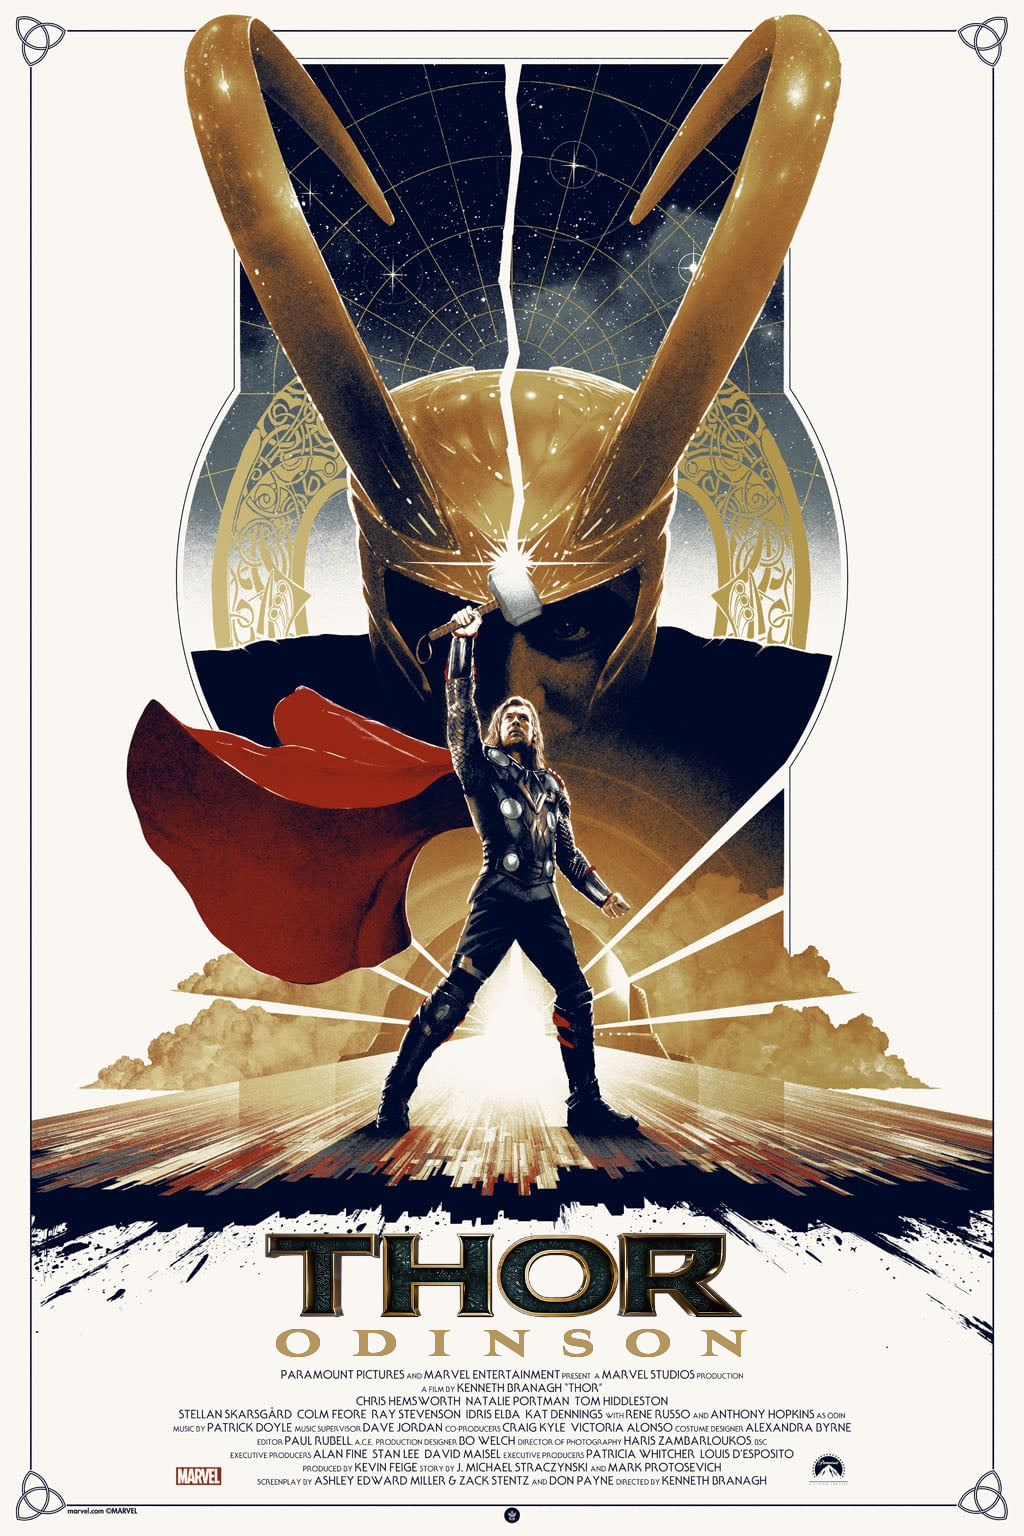 Thor: Odinson?